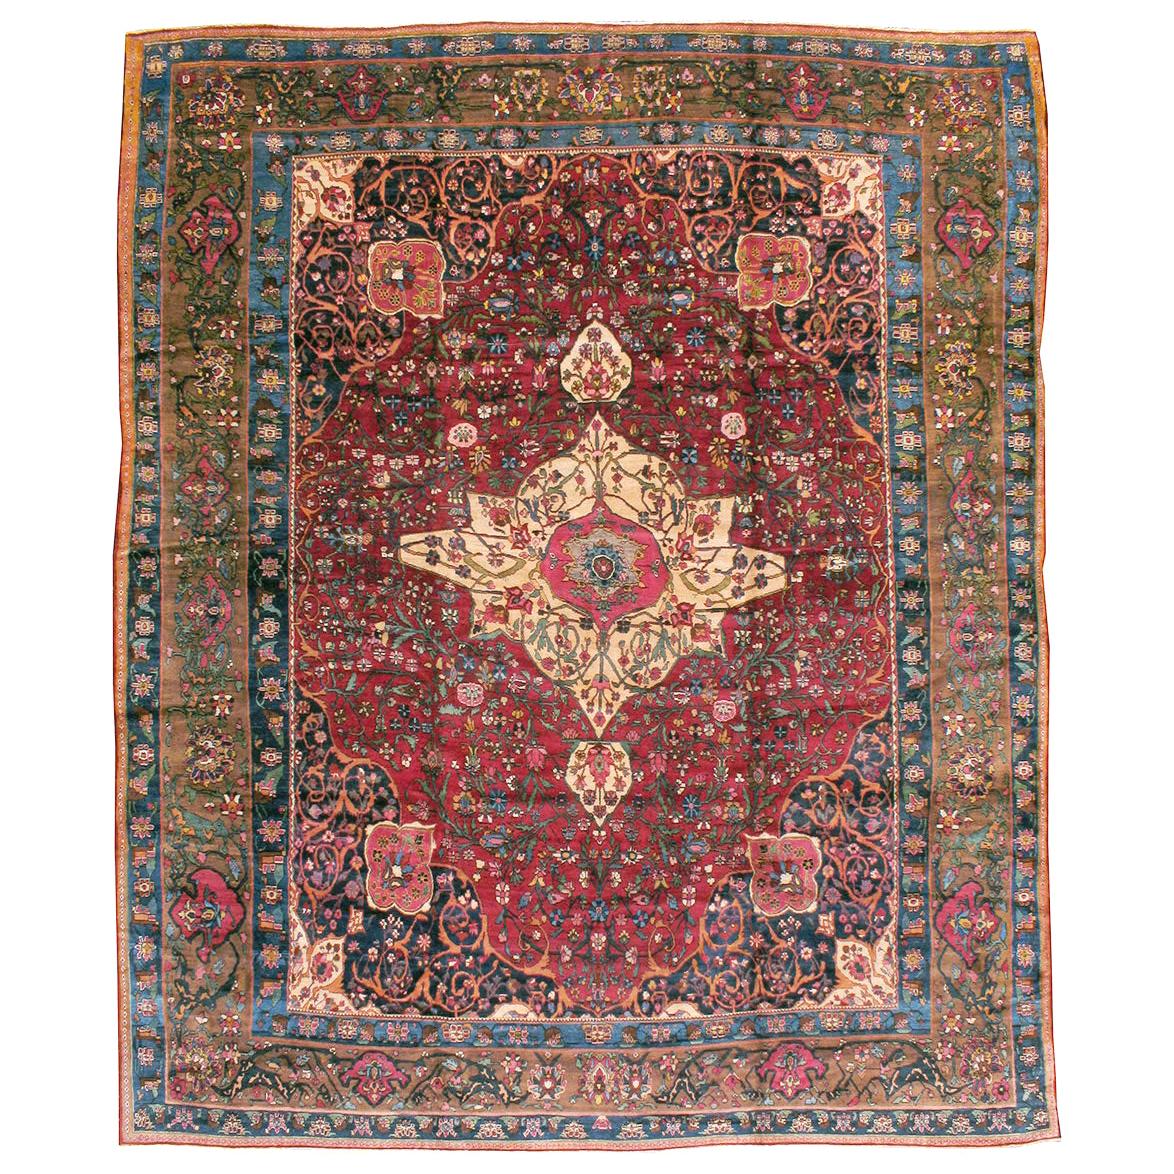 Early 20th Century Handmade Persian Bakhtiari Tribal Room Size Carpet